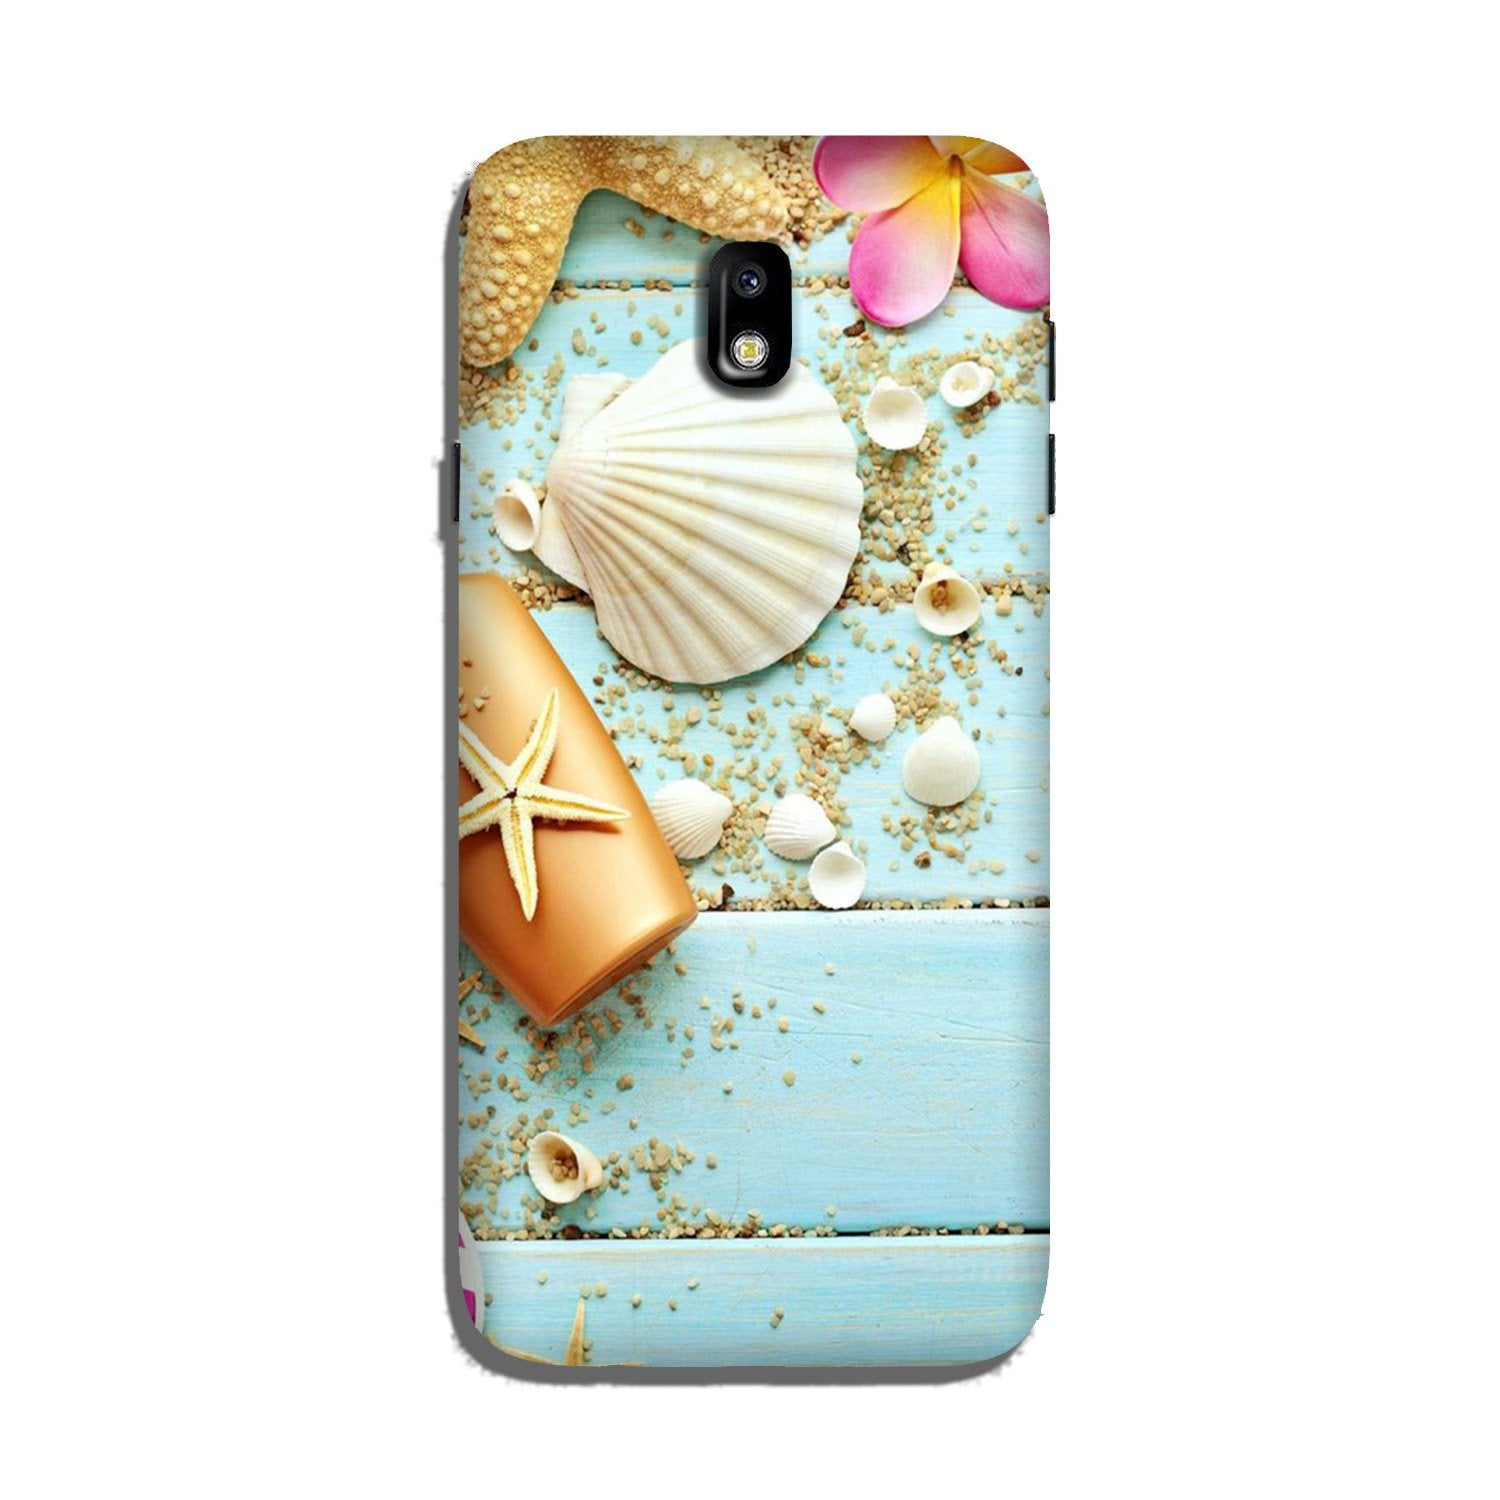 Sea Shells Case for Galaxy J7 Pro